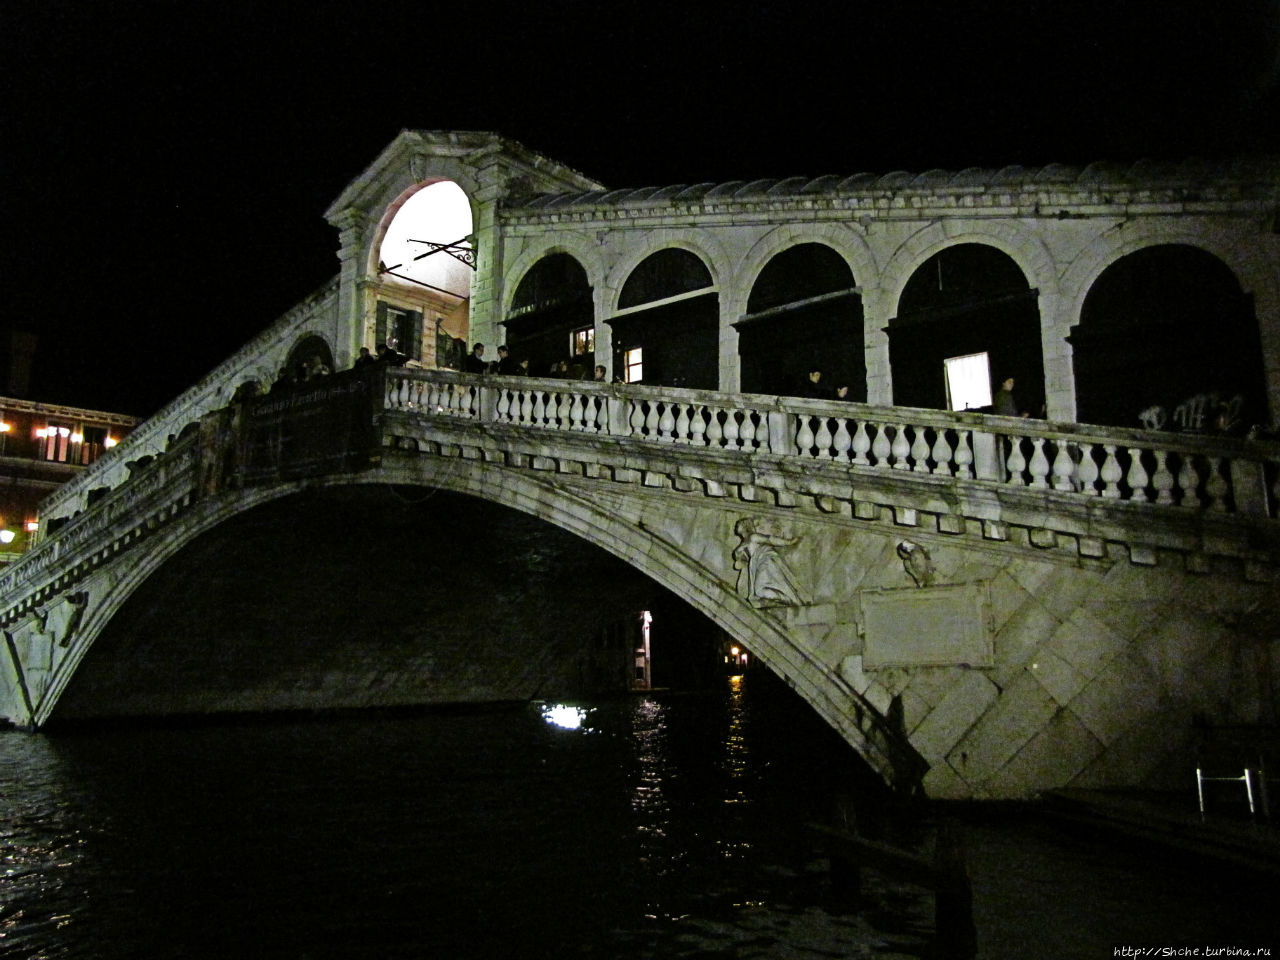 Мост Риальто Венеция, Италия